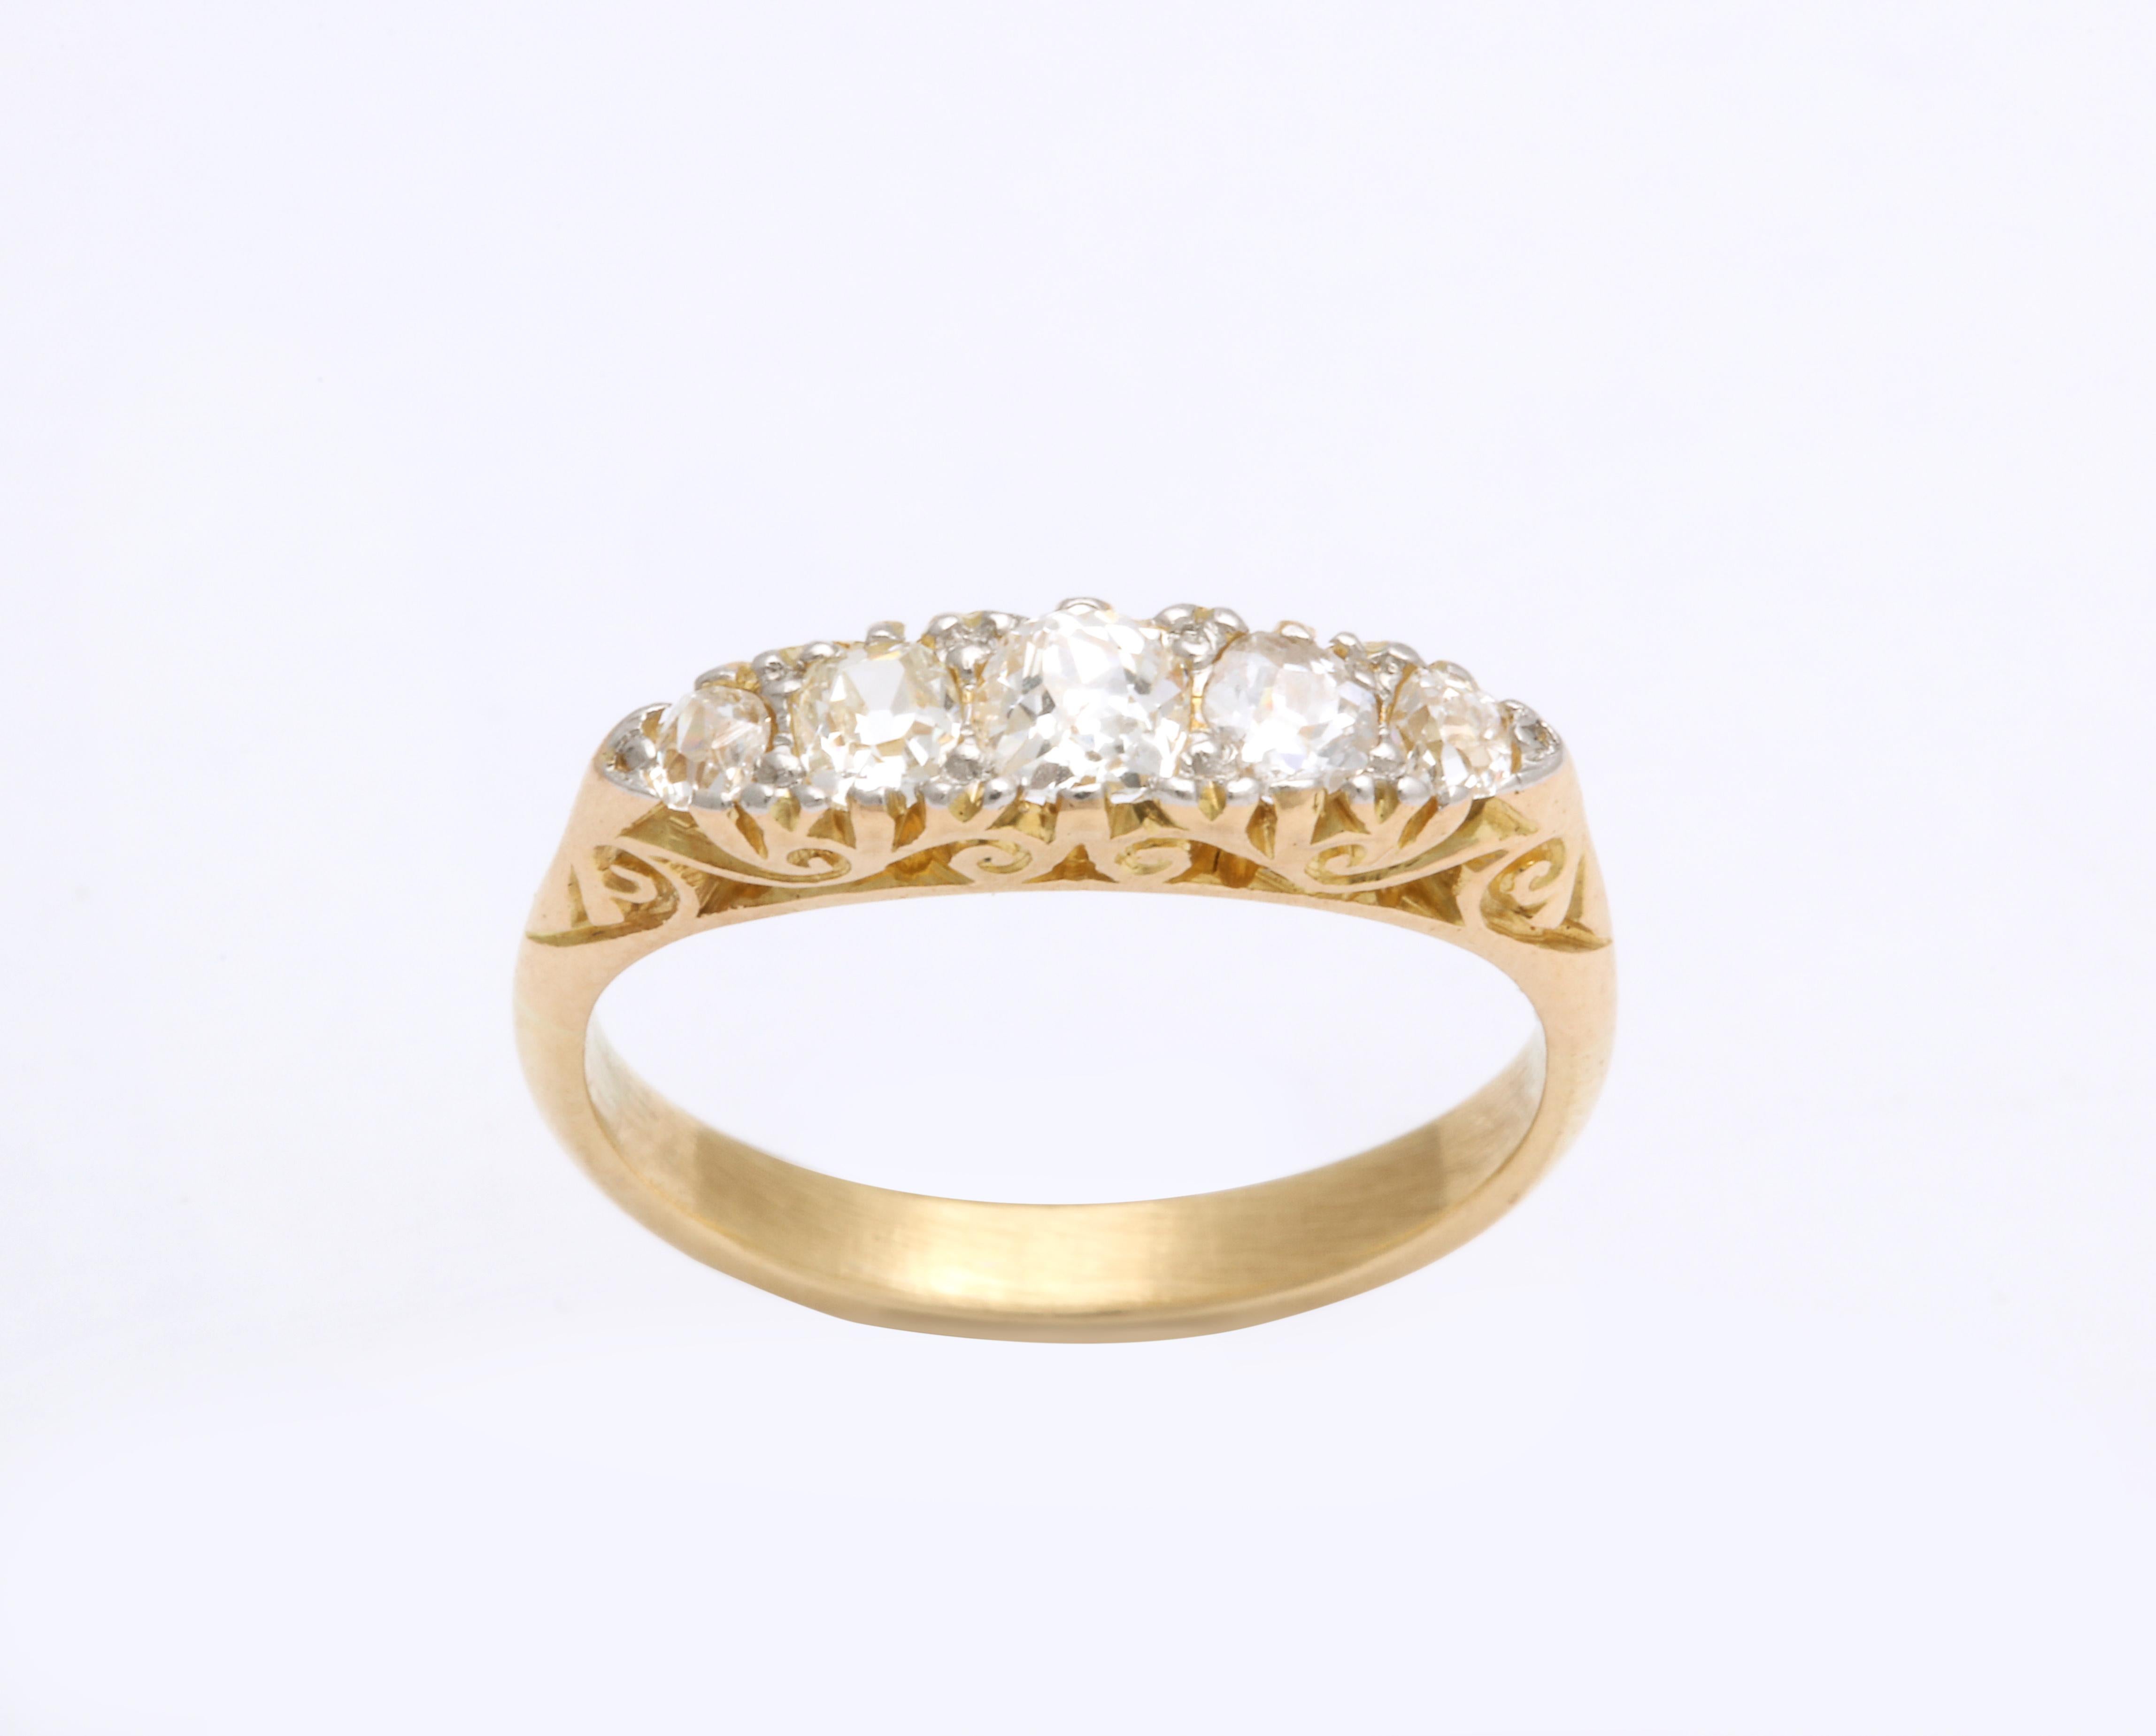 Women's English 18k Gold Diamond Five-Stone Ring, circa 1890